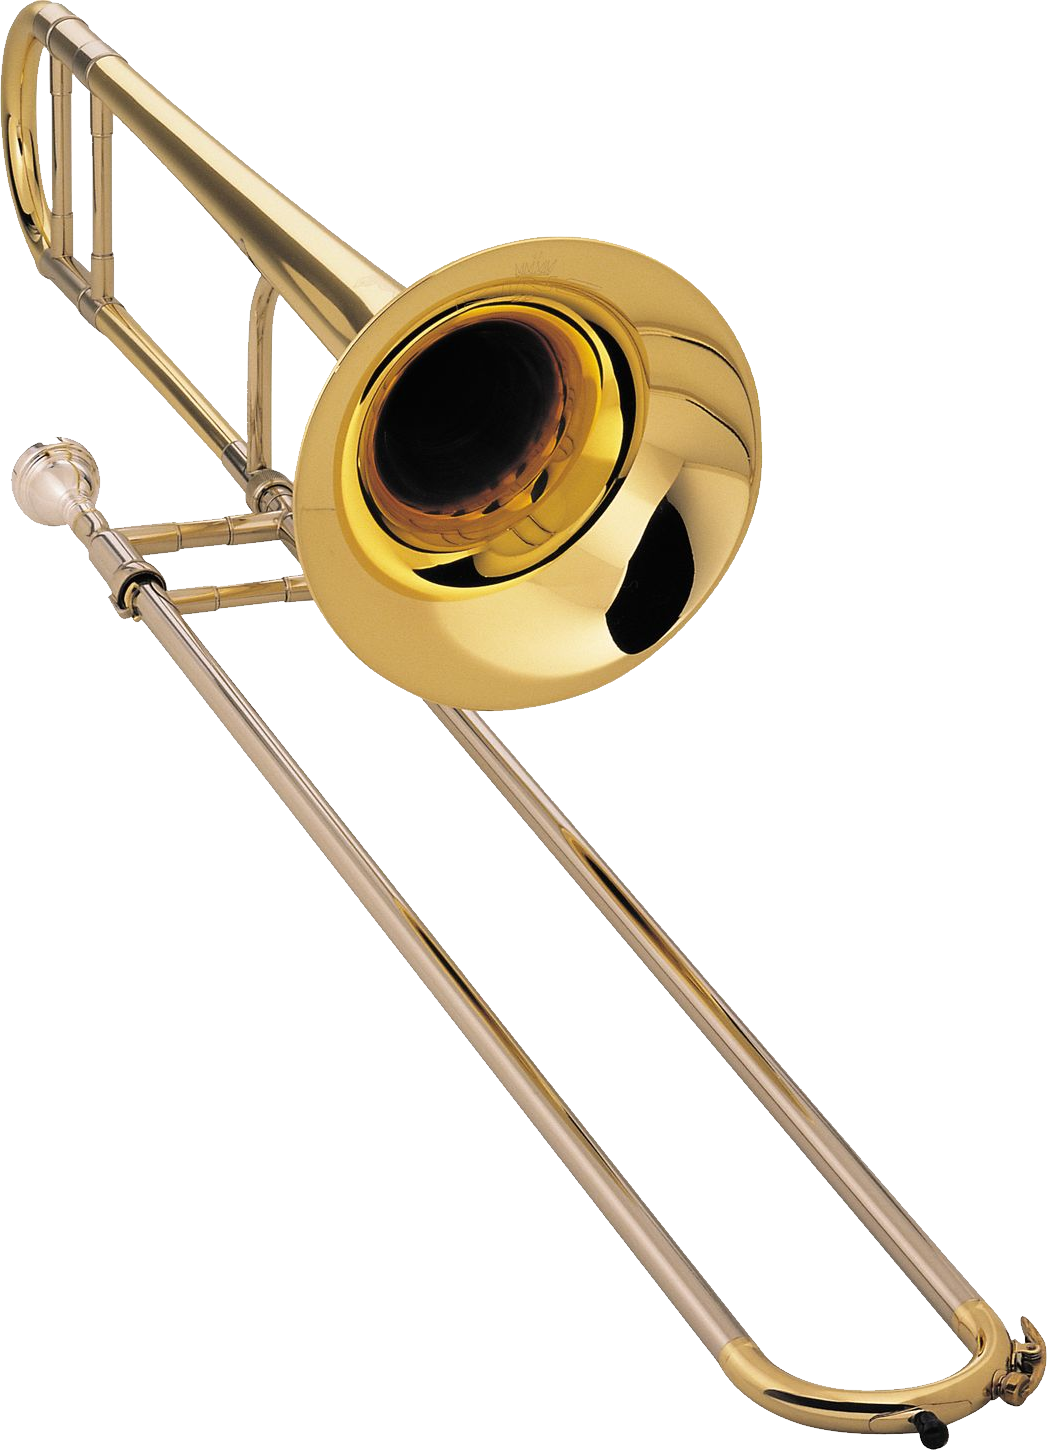 Trombone, strumento musicale